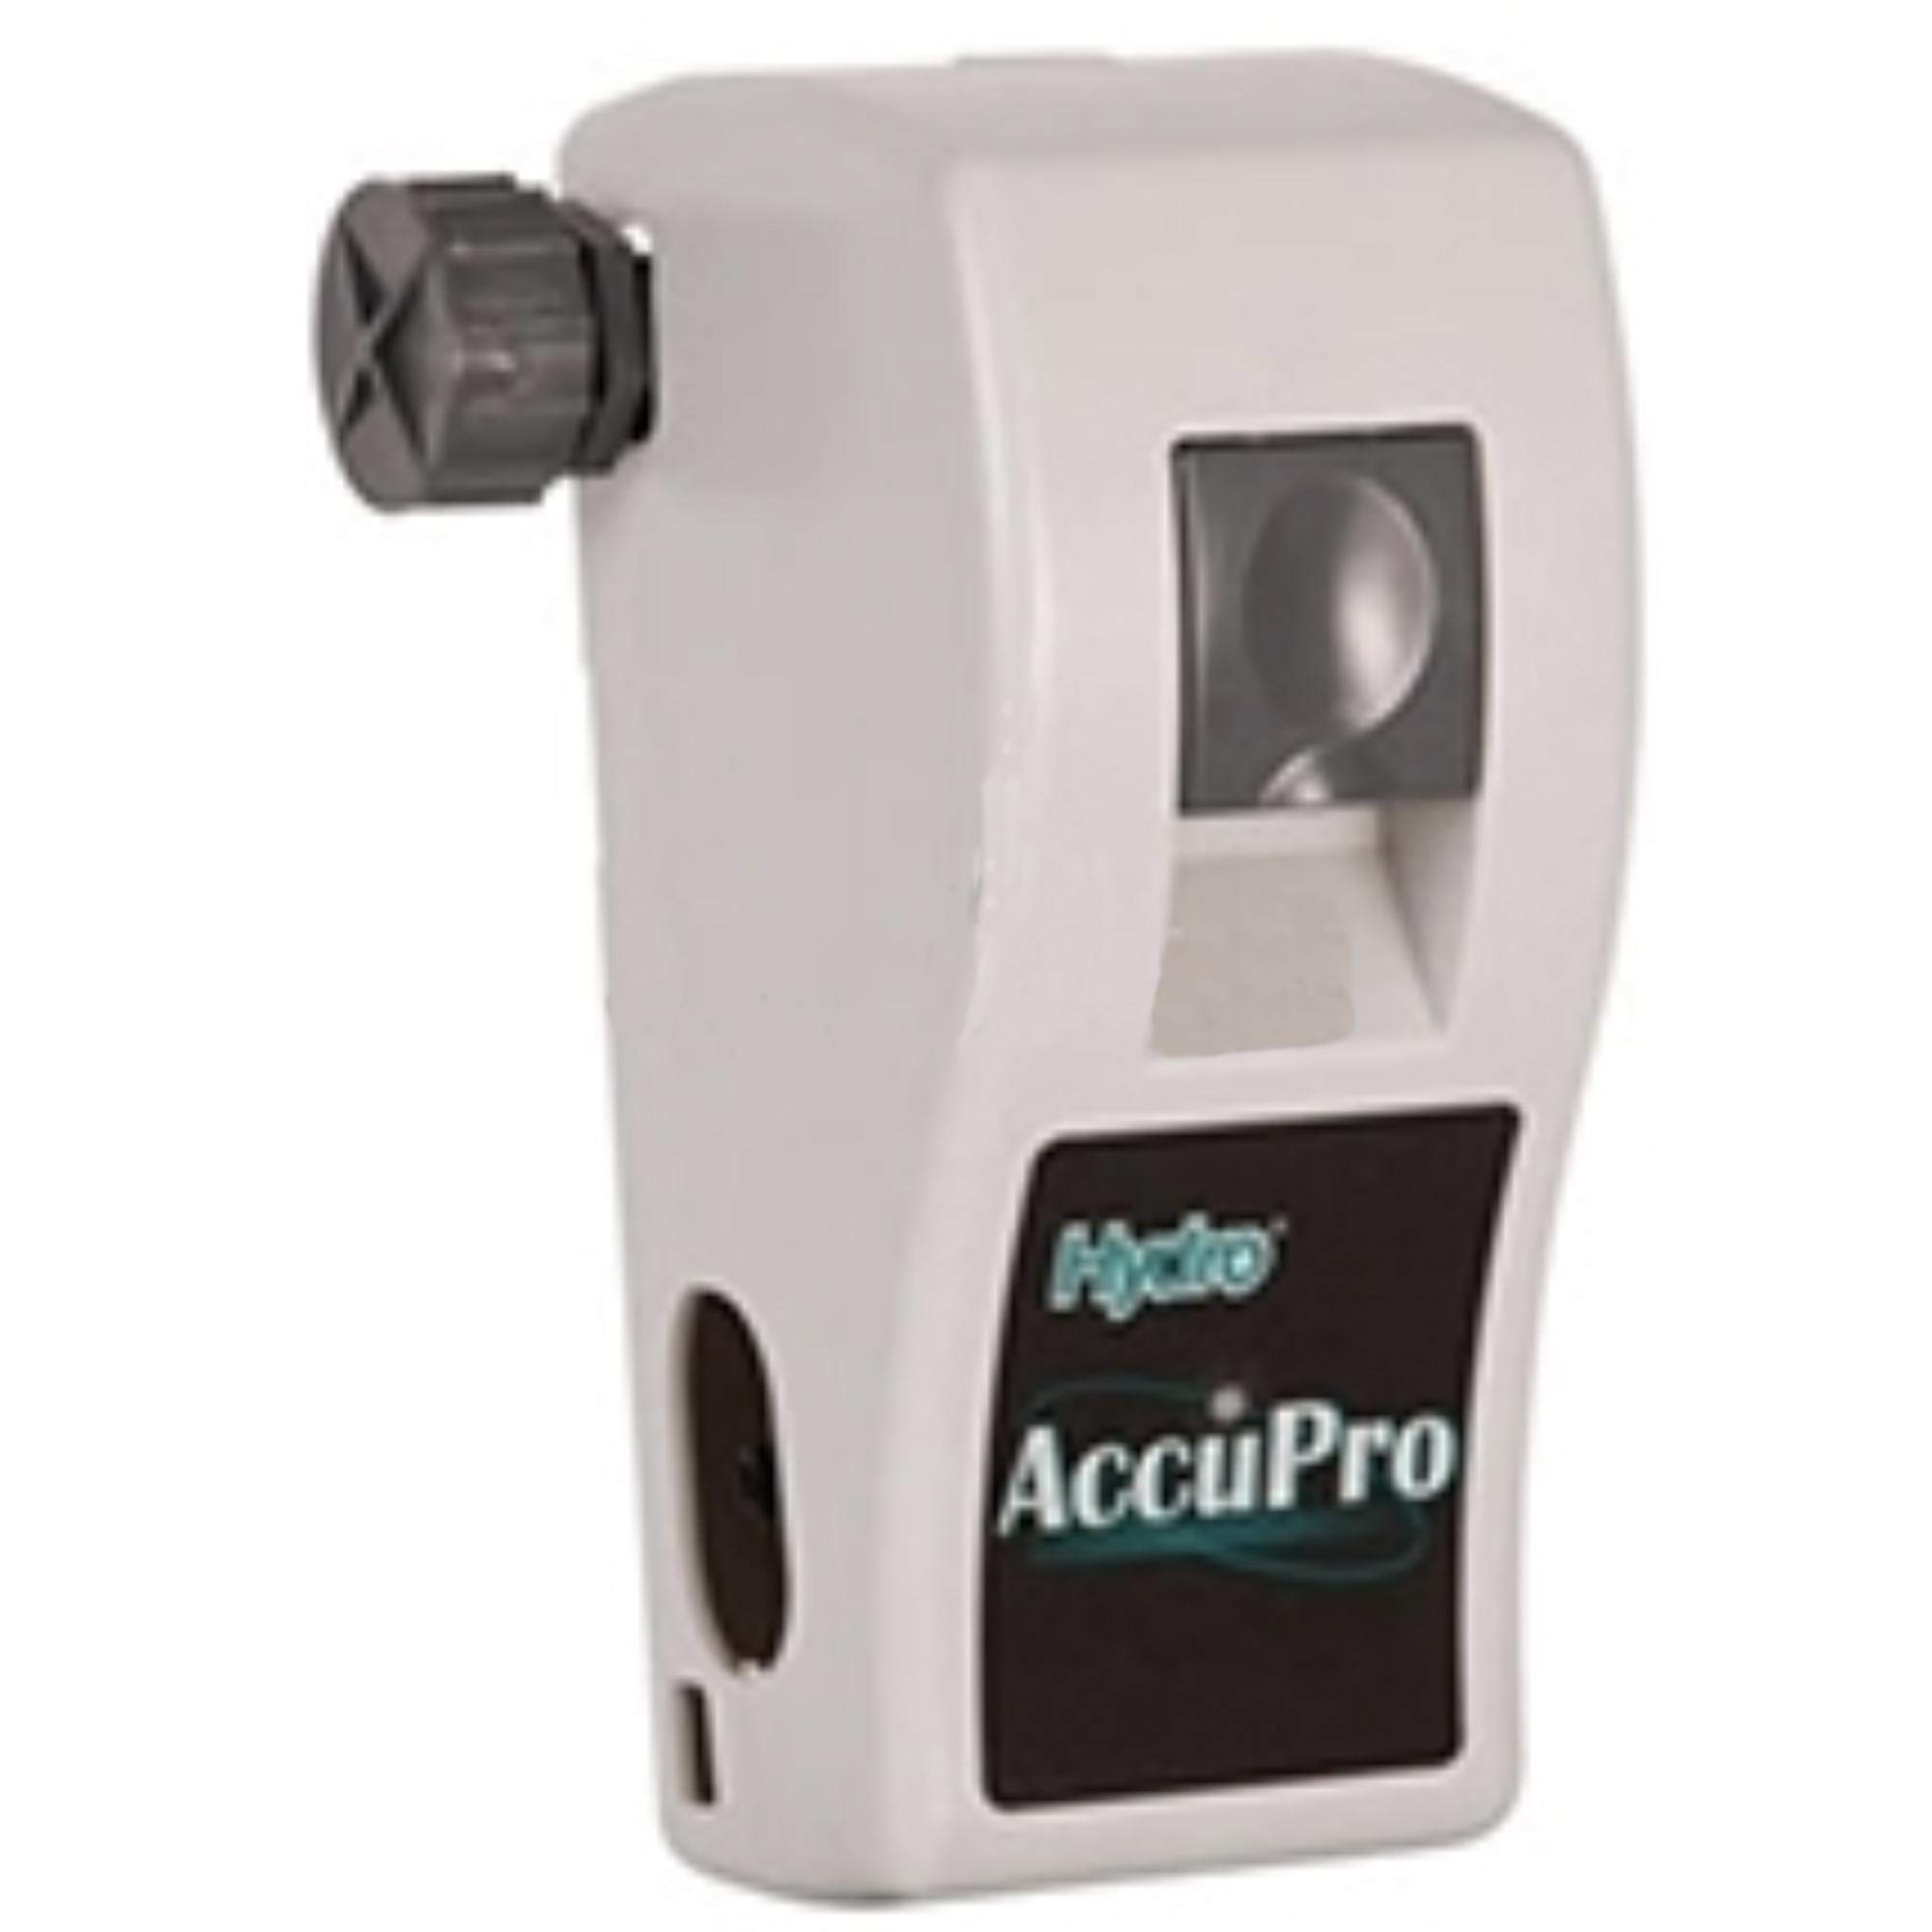 Accupro Bottle - Dispenser 2000x2000px copy.jpg